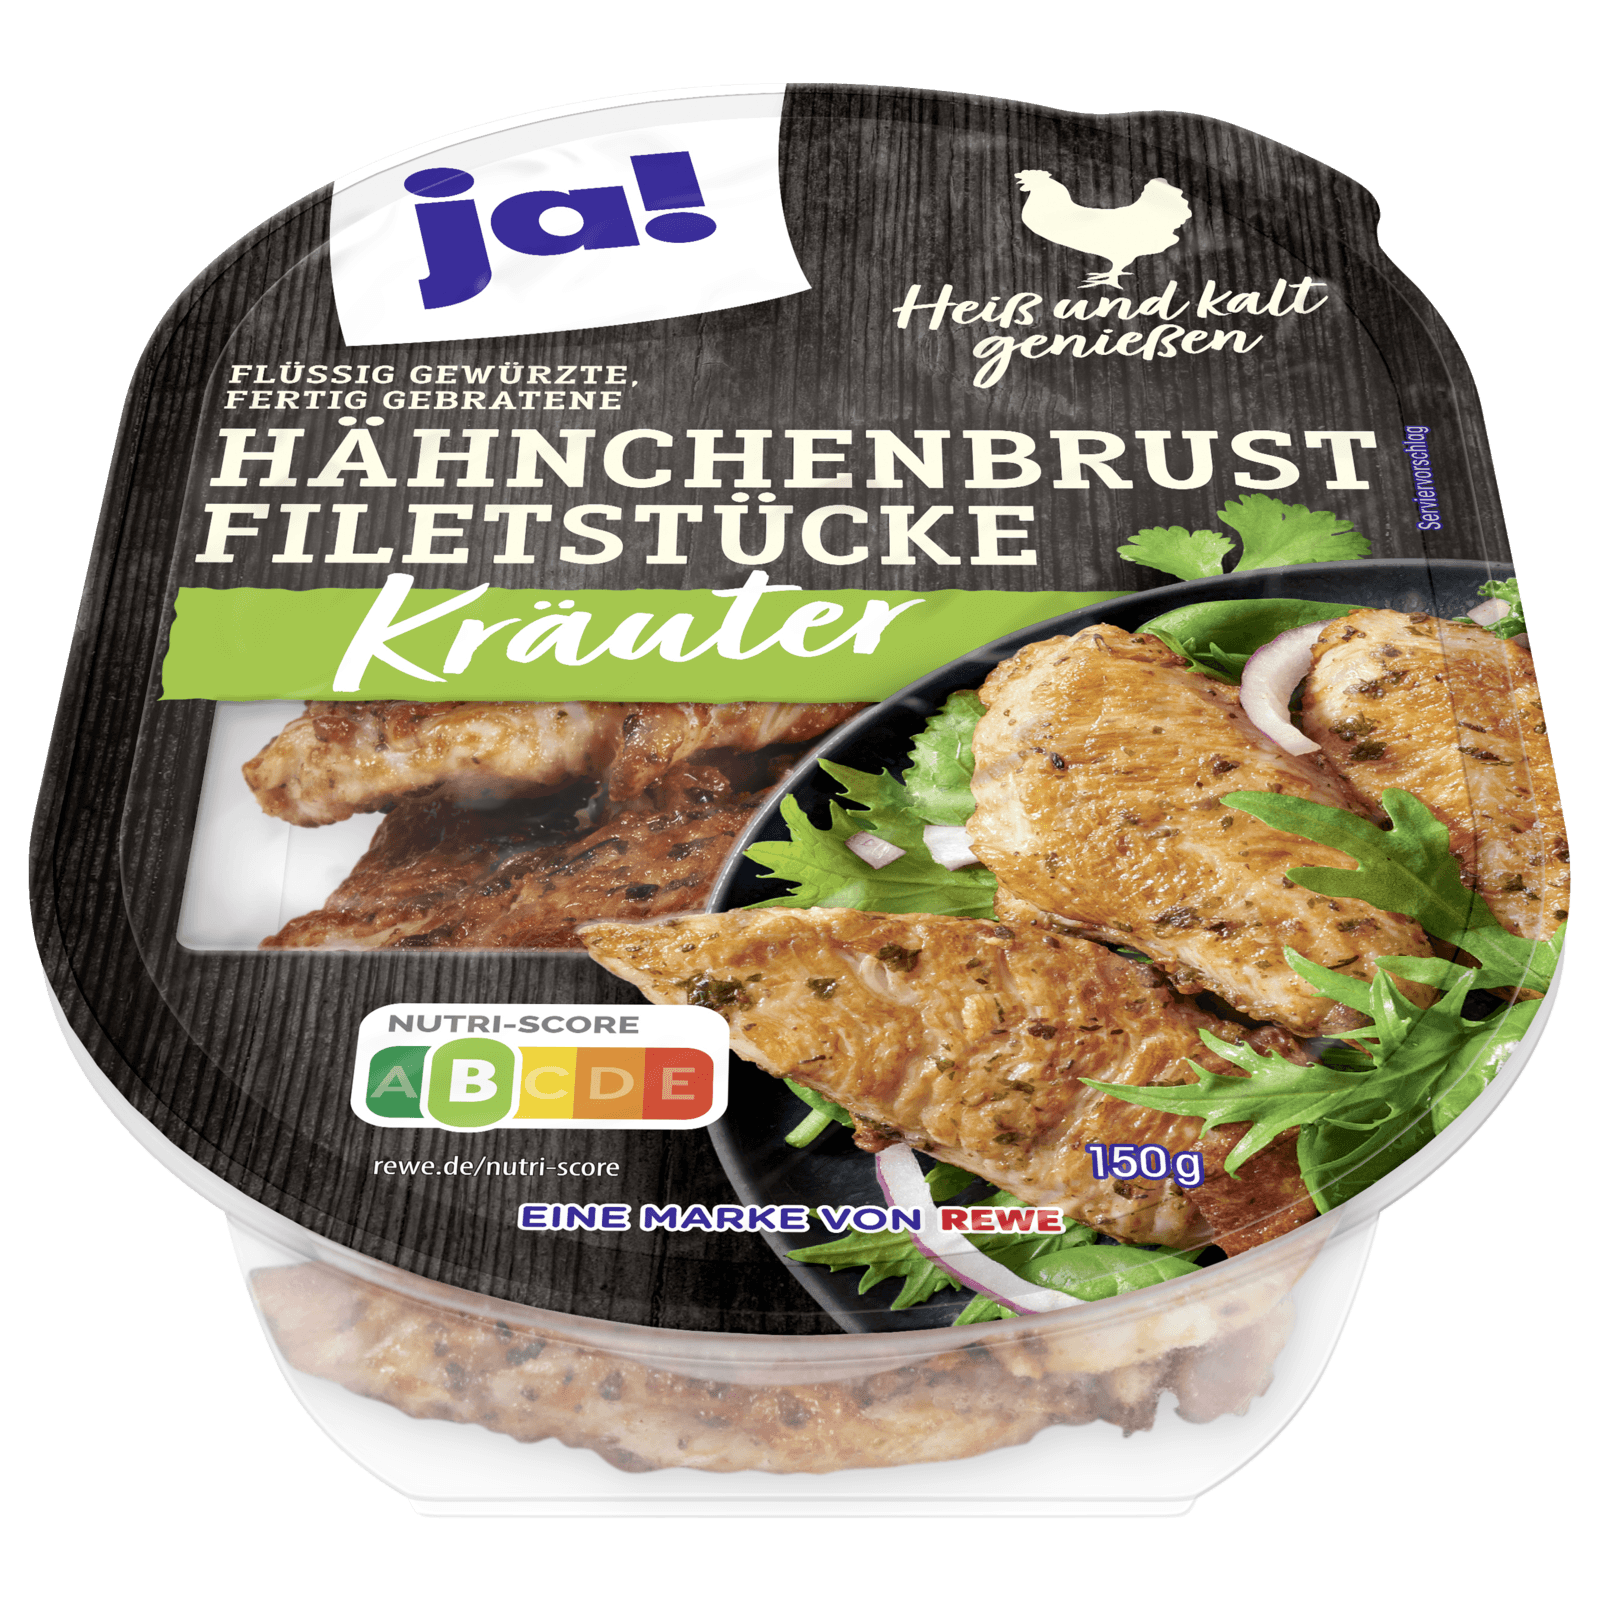 ja! Hähnchenbrust Filetstücke Kräuter 150g bei REWE online bestellen!